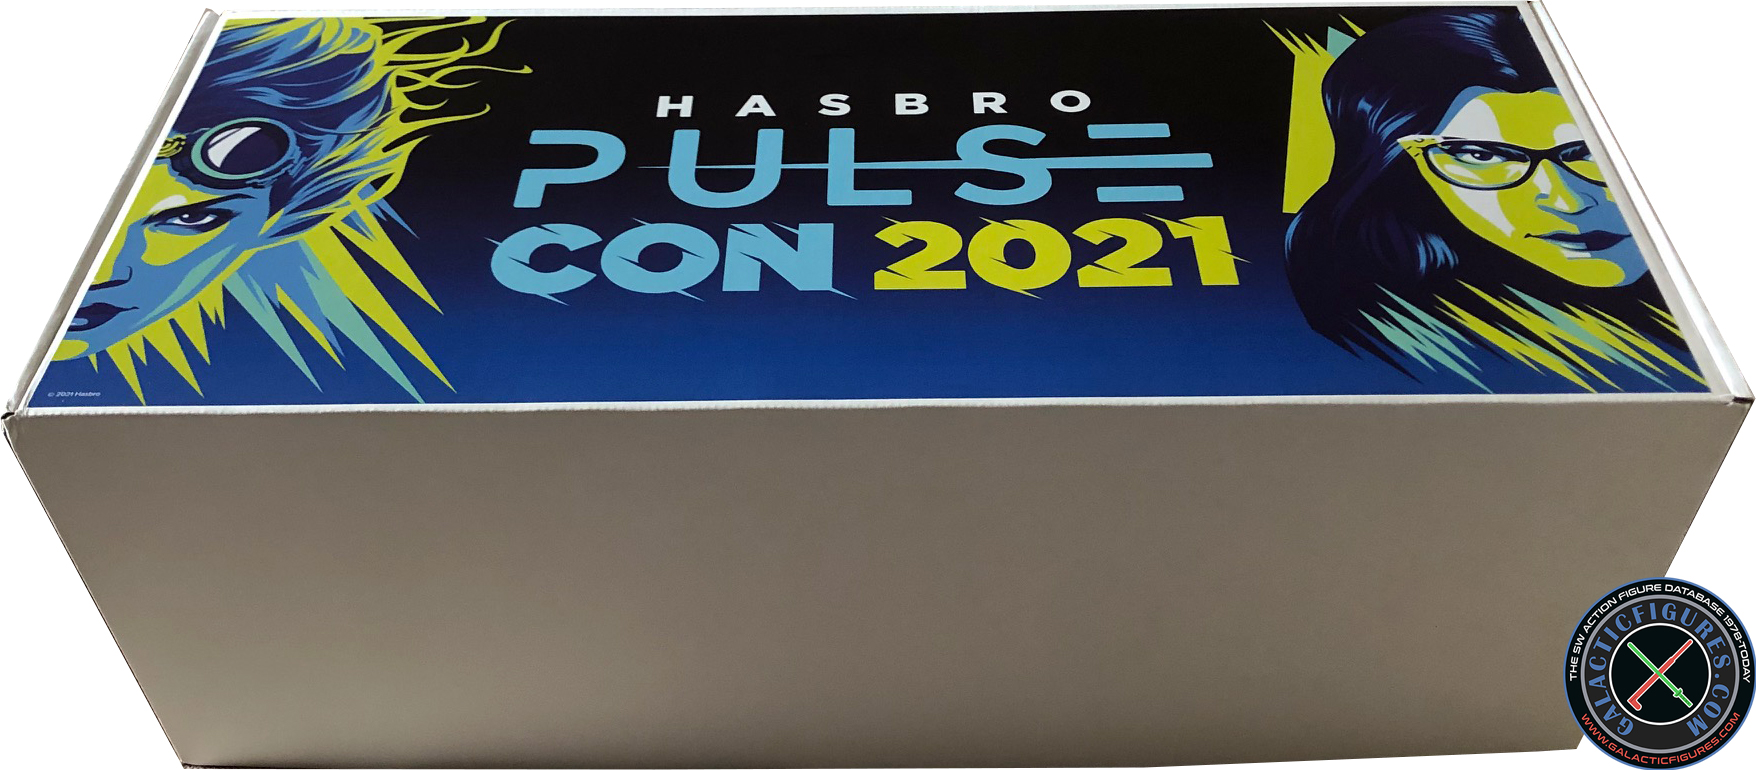 Hasbro Pulse Promo Box